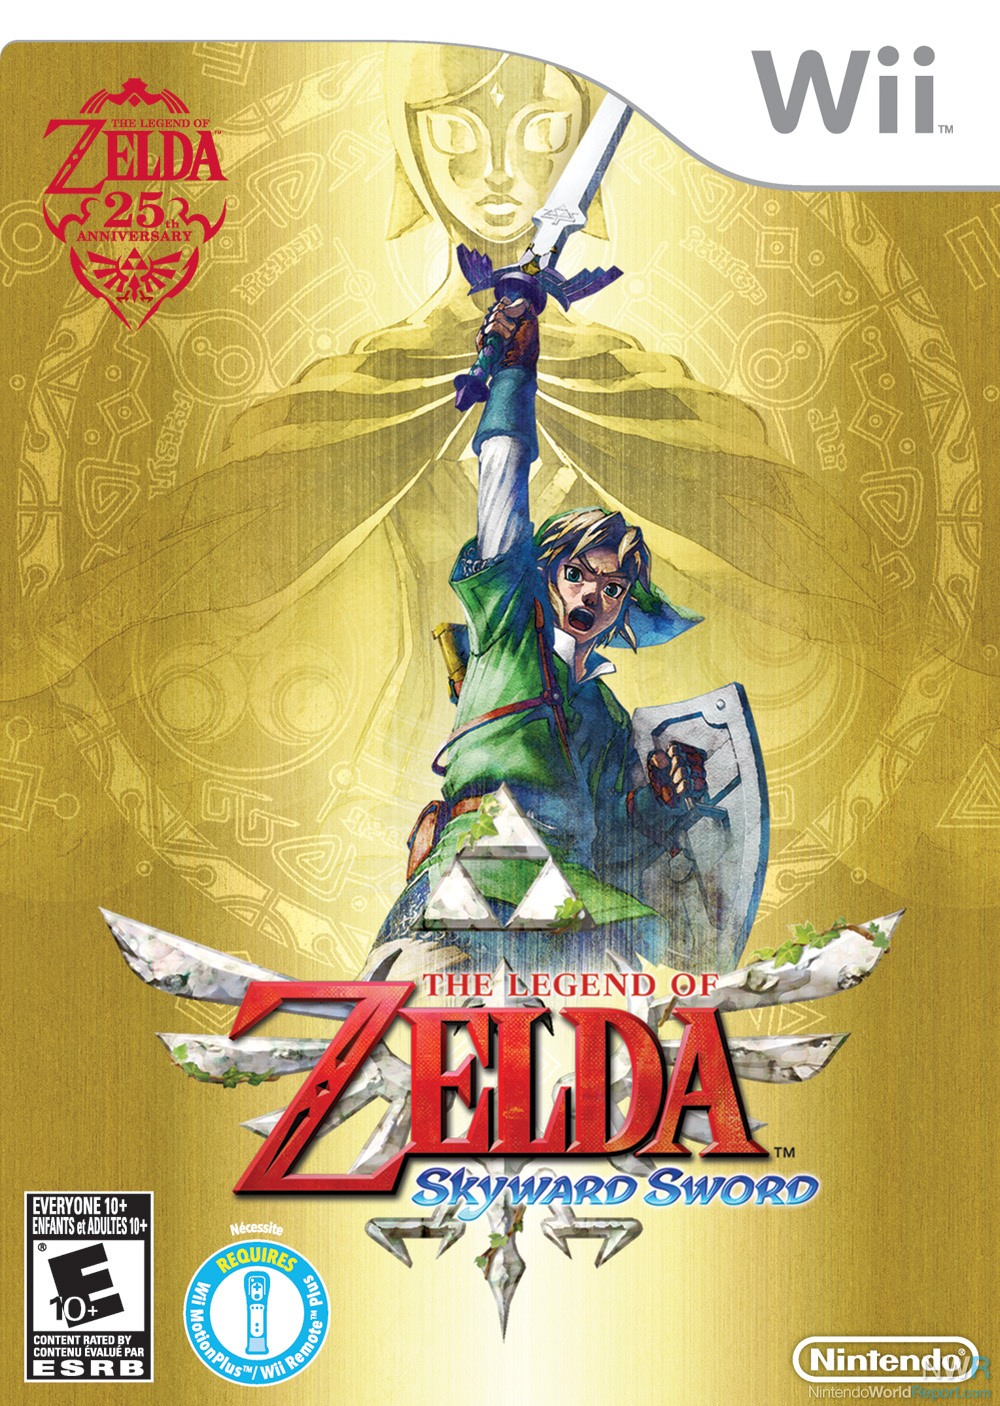 The Legend of Zelda: Skyward Sword Review - Review - Nintendo World Report